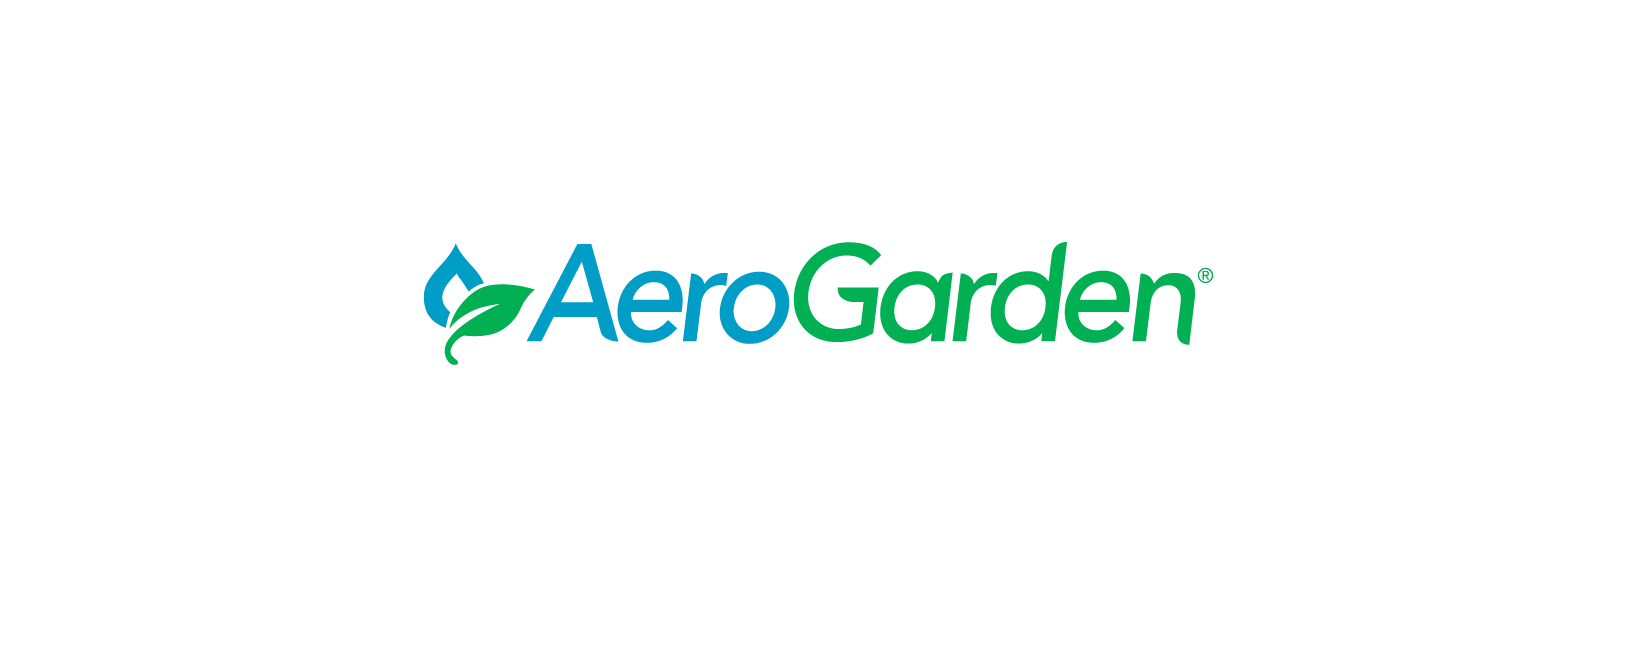 AeroGarden Discount Code 2022